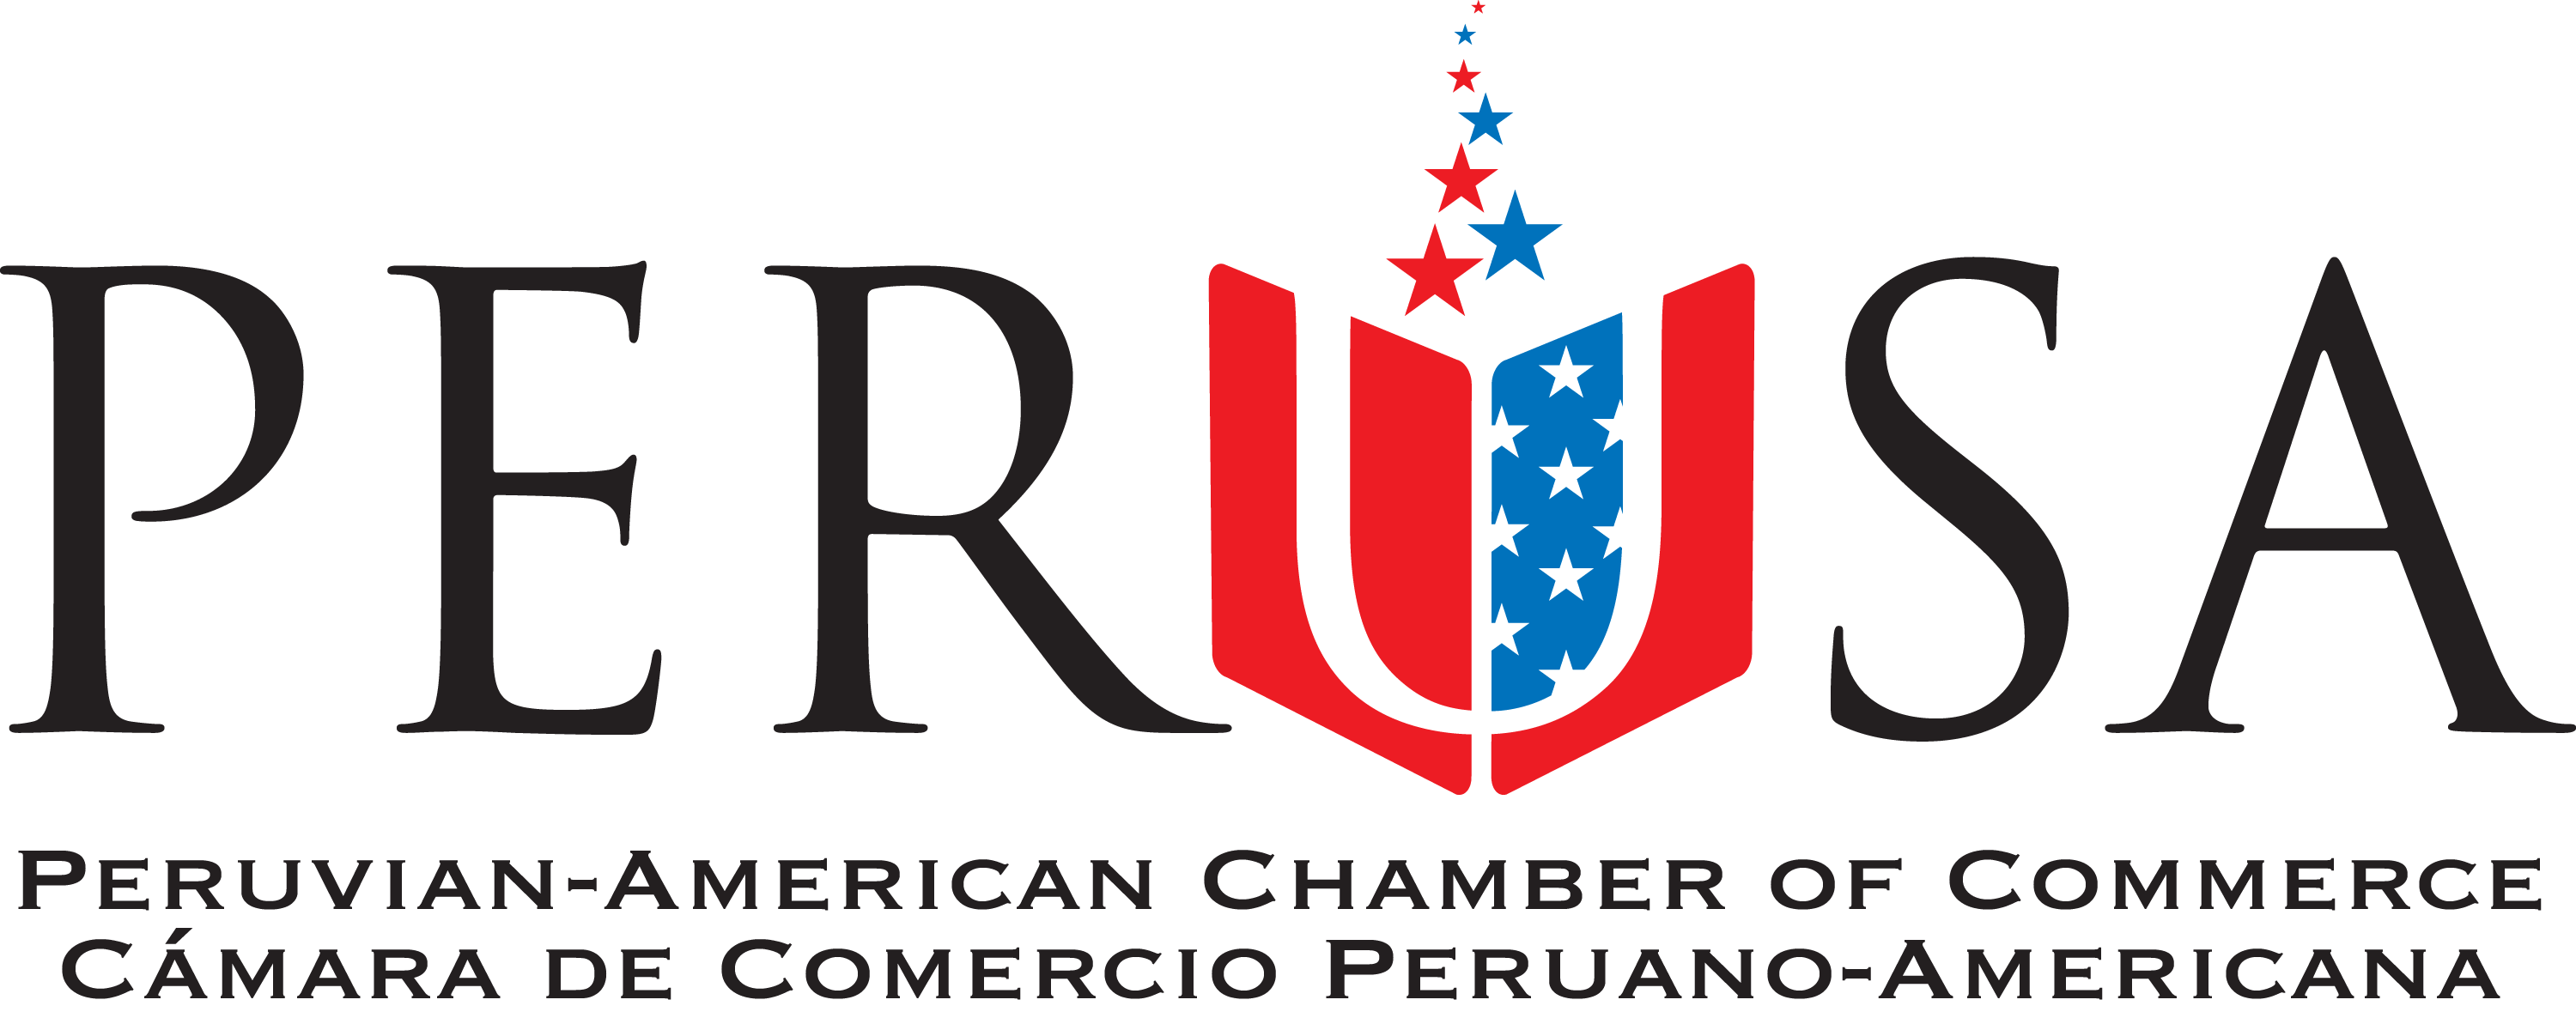 Chamber Logo - Peruvian American Chamber of Commerce